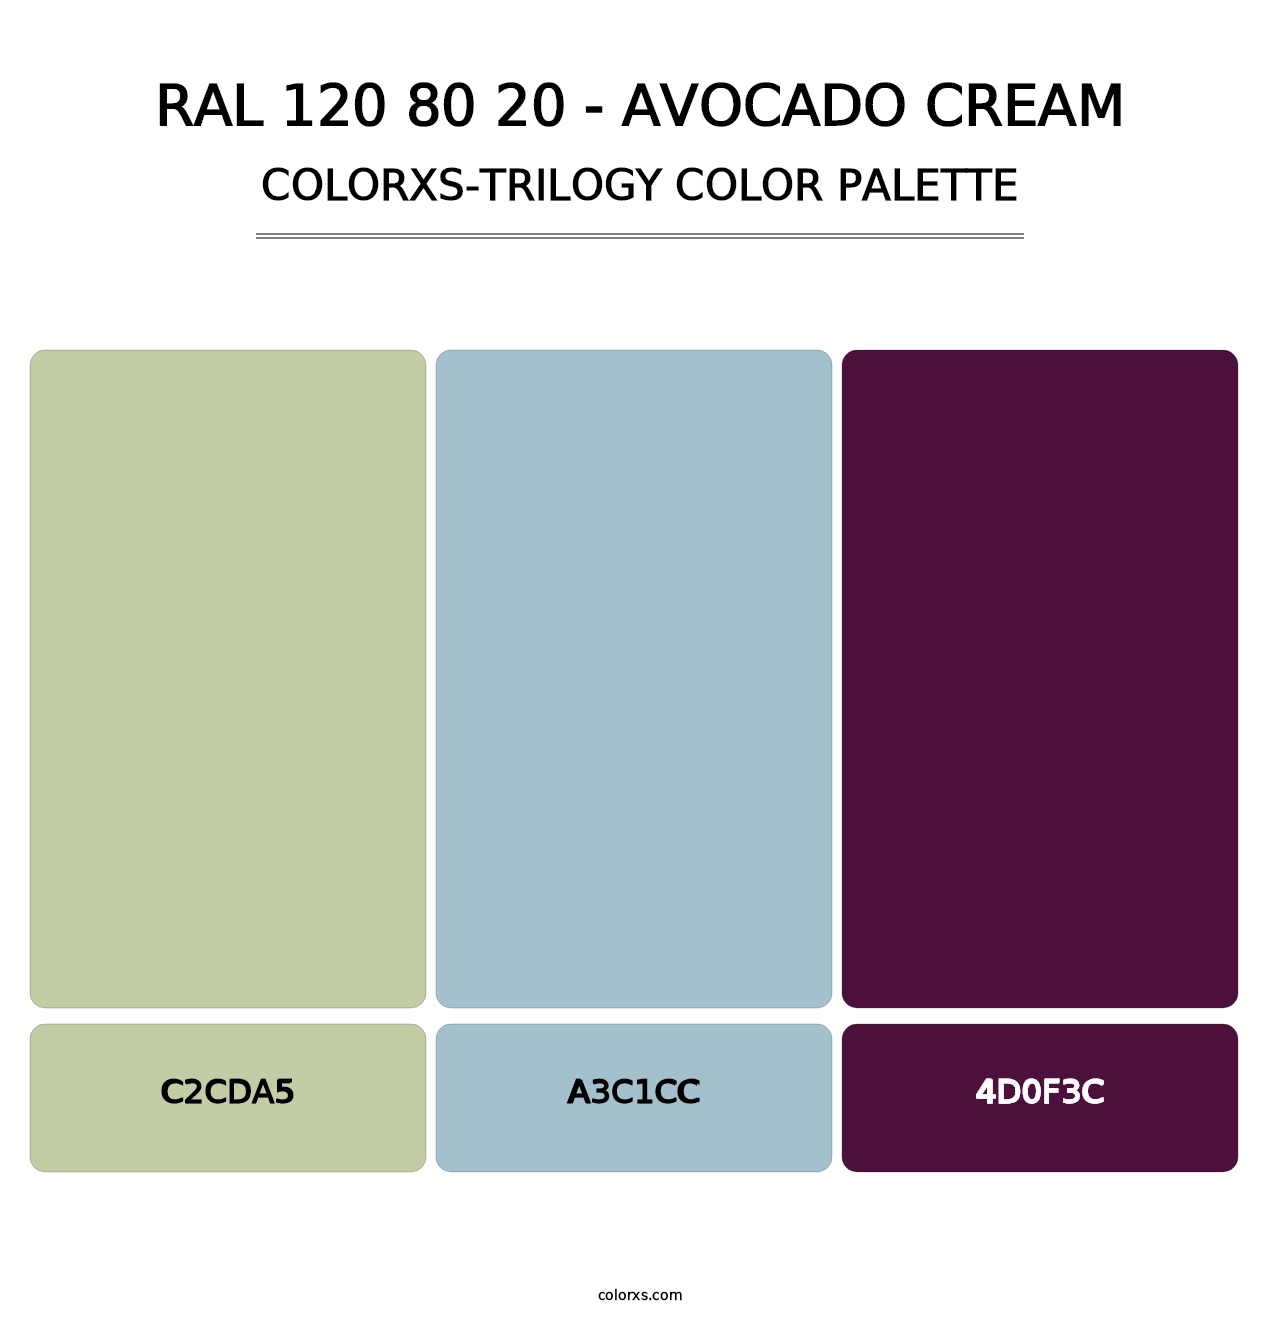 RAL 120 80 20 - Avocado Cream - Colorxs Trilogy Palette